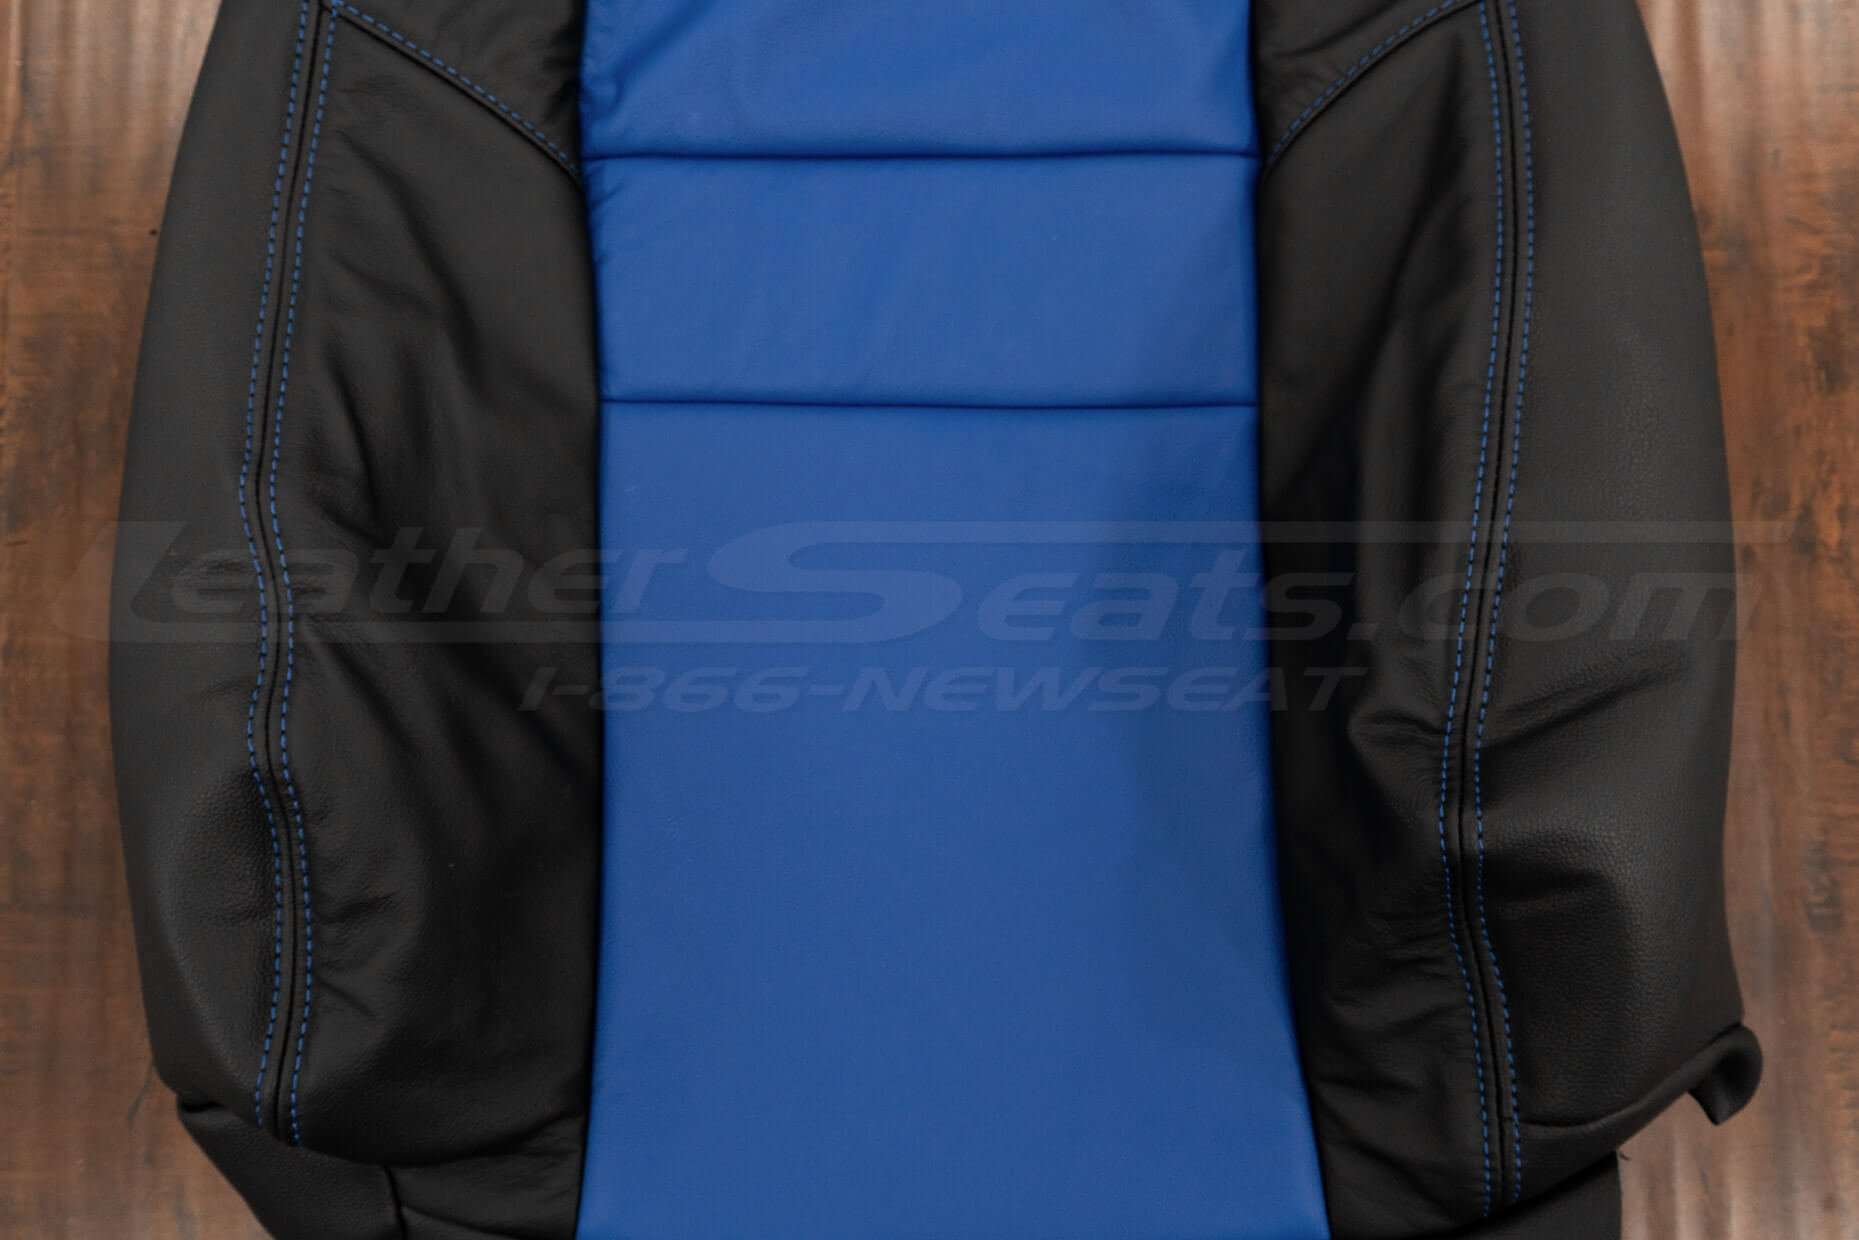 Body section of backrest upholstery